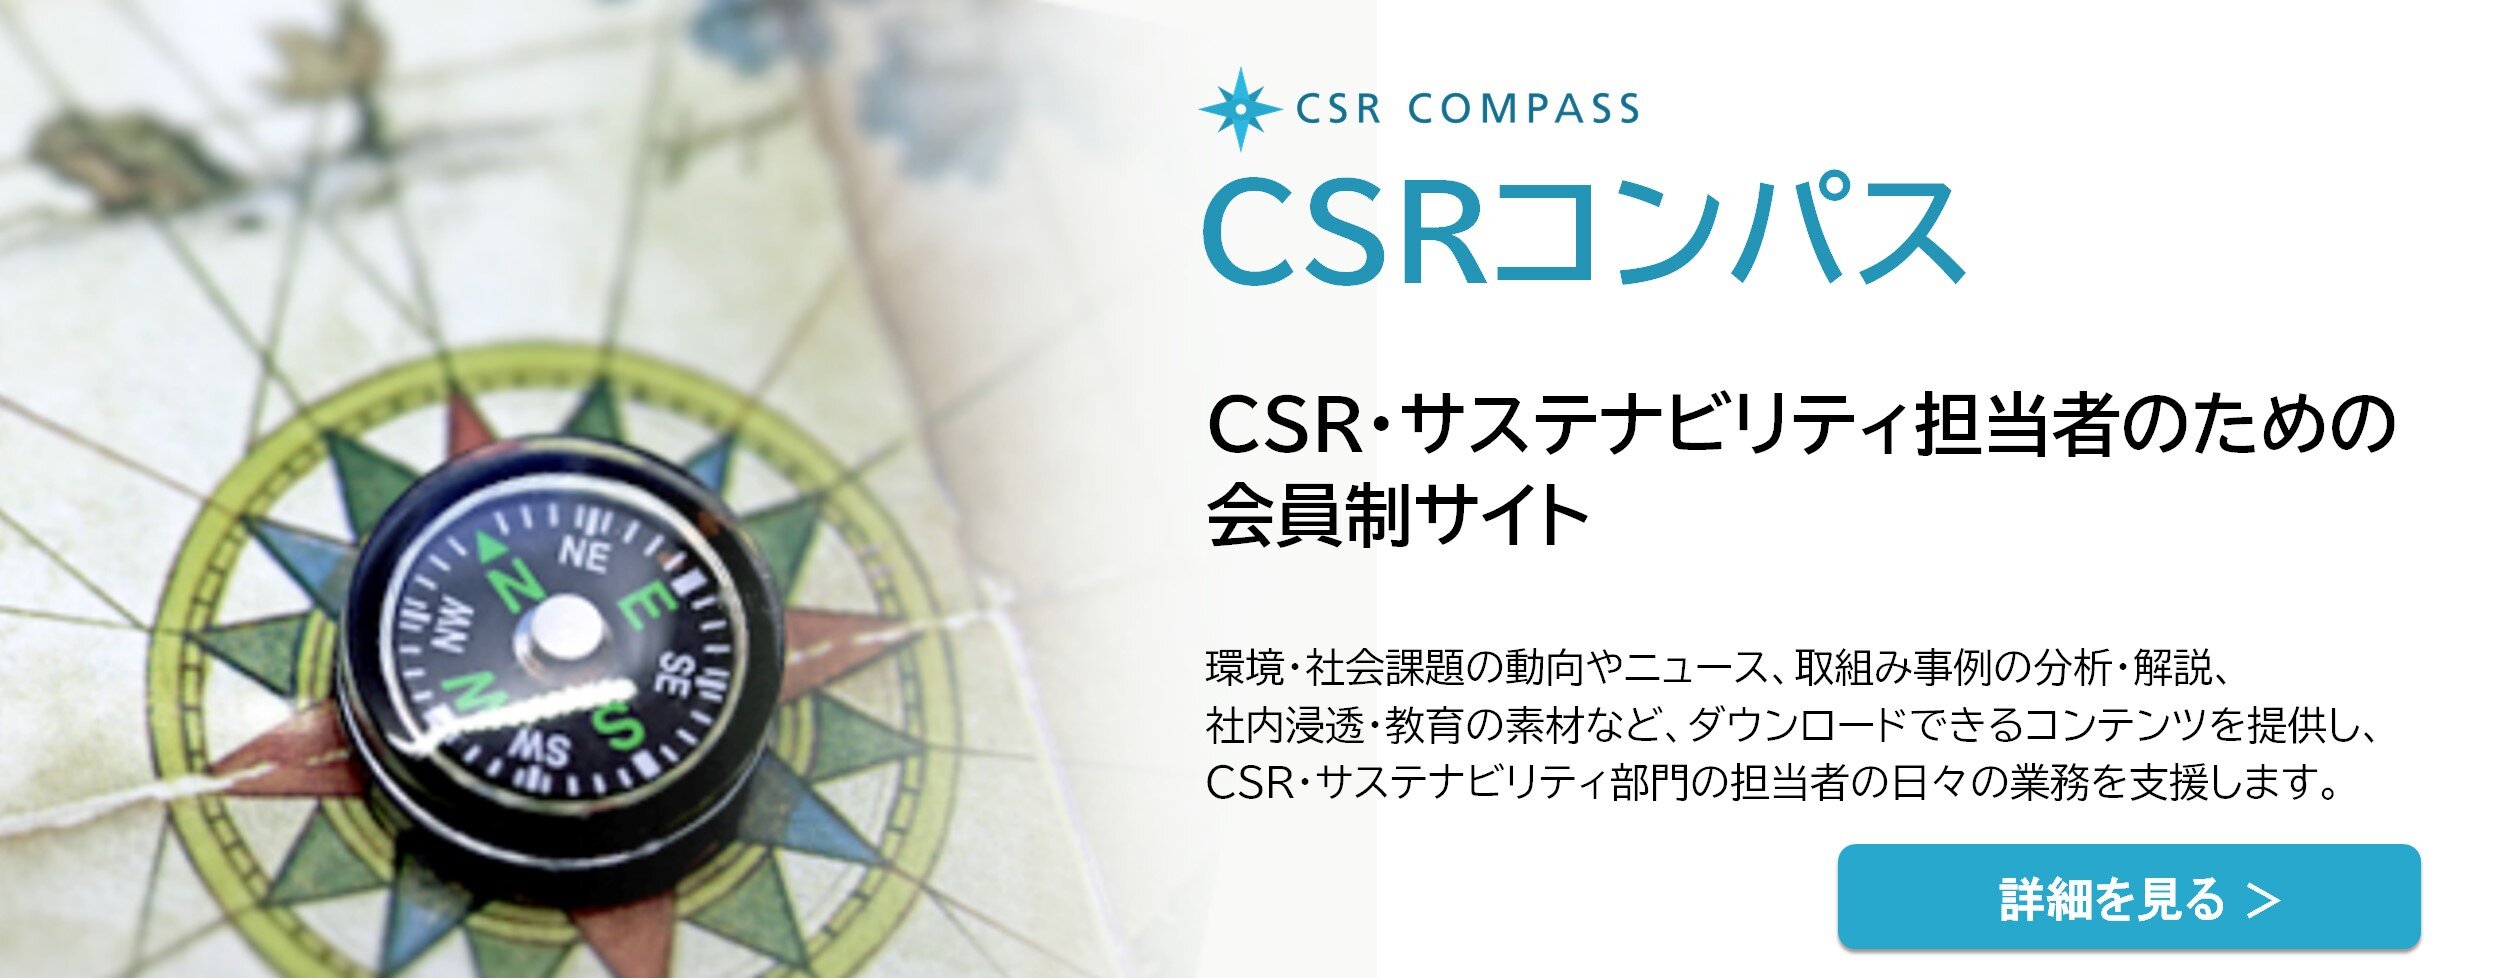 CSRコンパス